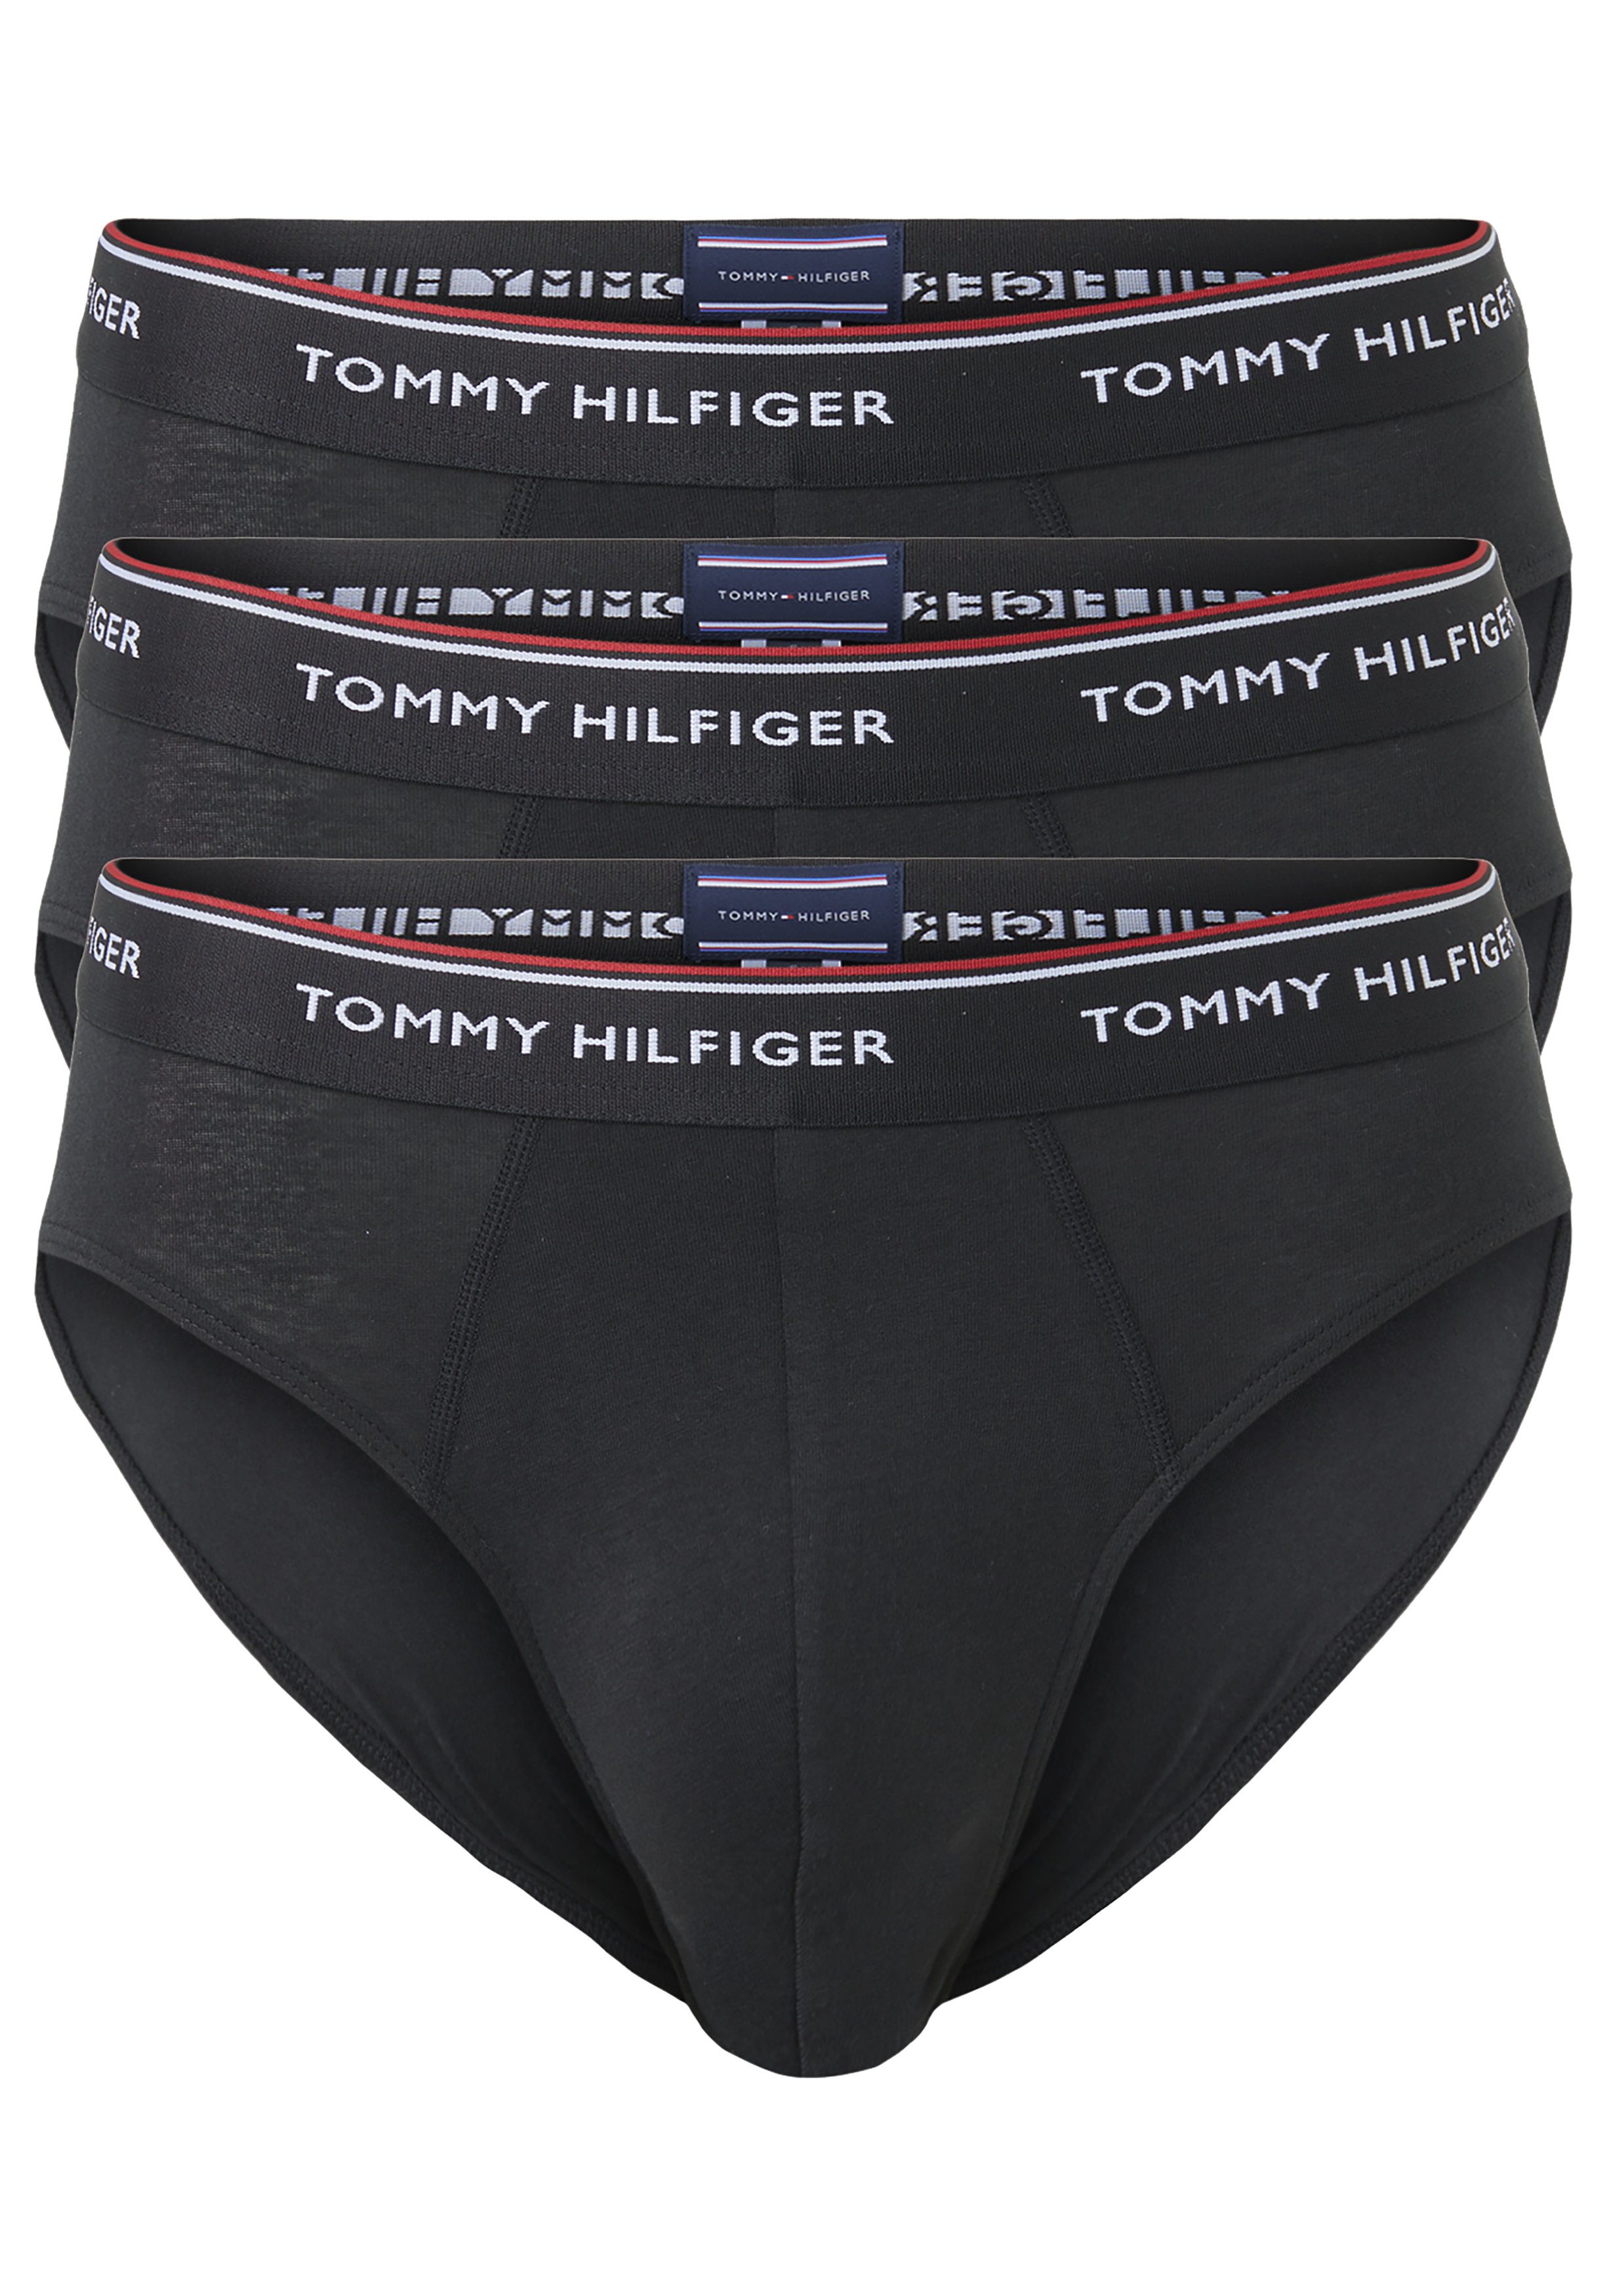 onbekend Hoopvol lading Tommy Hilfiger slips (3-pack), zwart - Gratis bezorgd